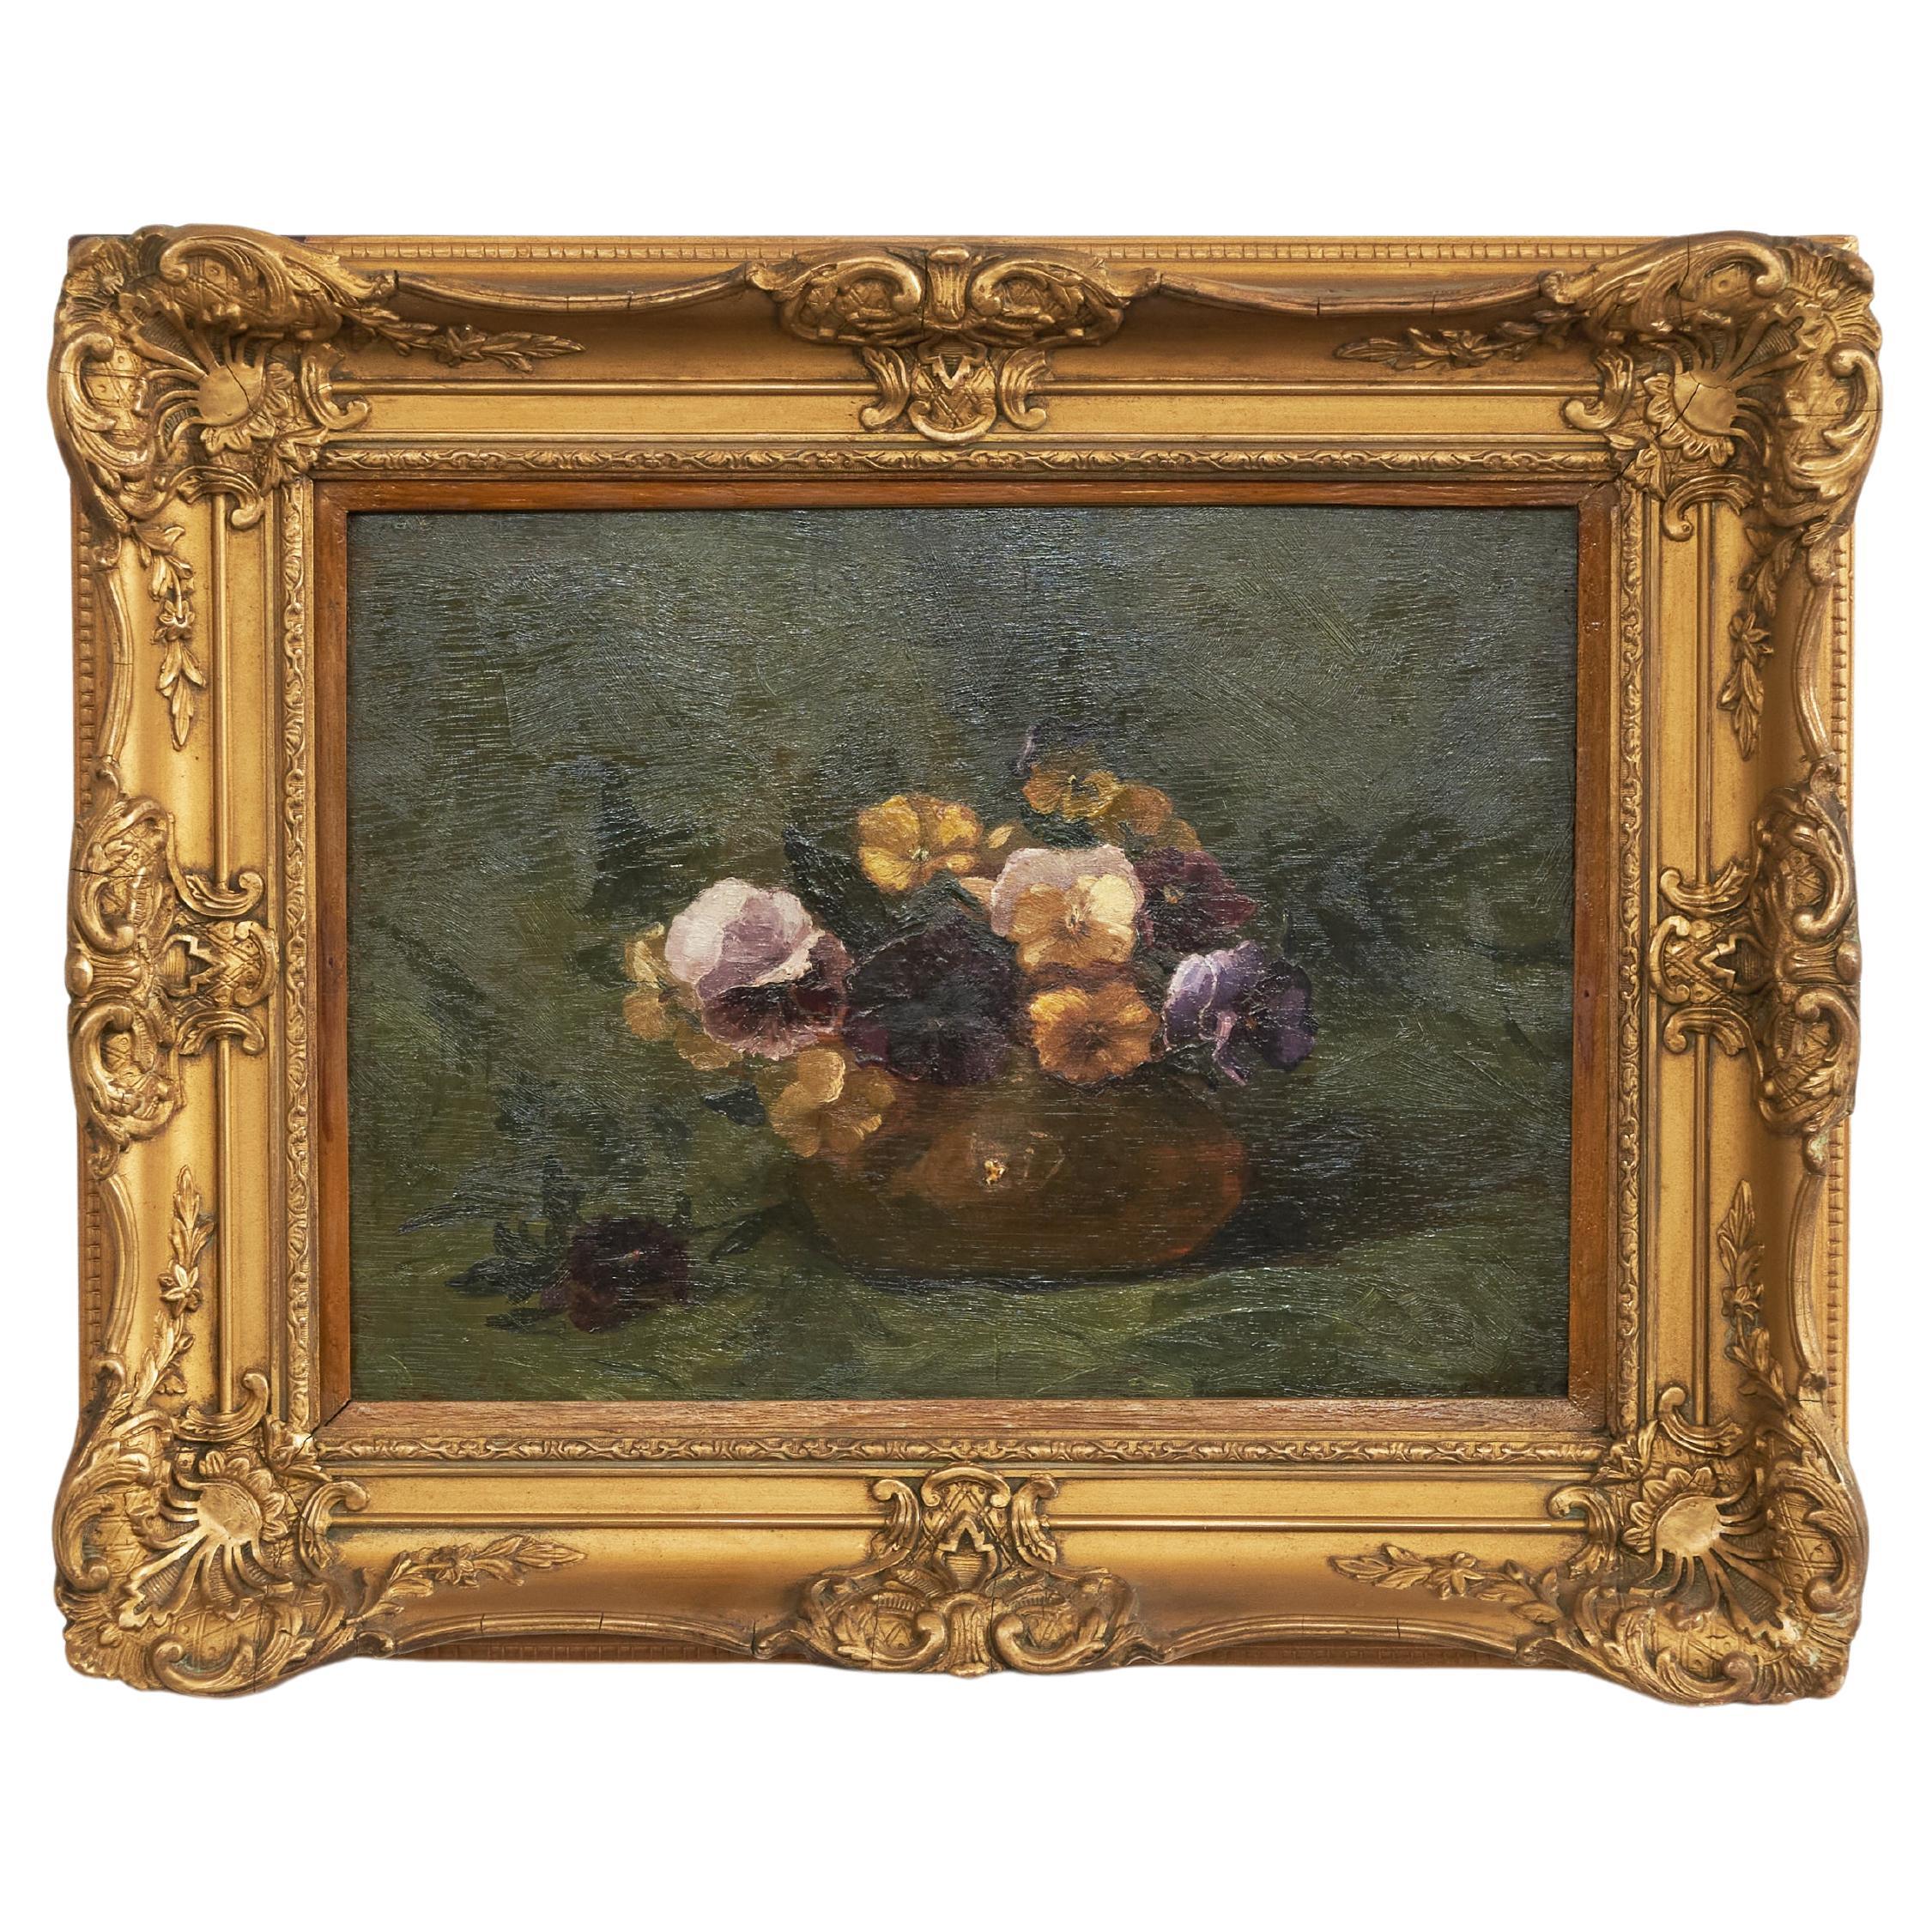 Still Life with Violets Oil on Panel in Ornate Gilt Frame 1880s